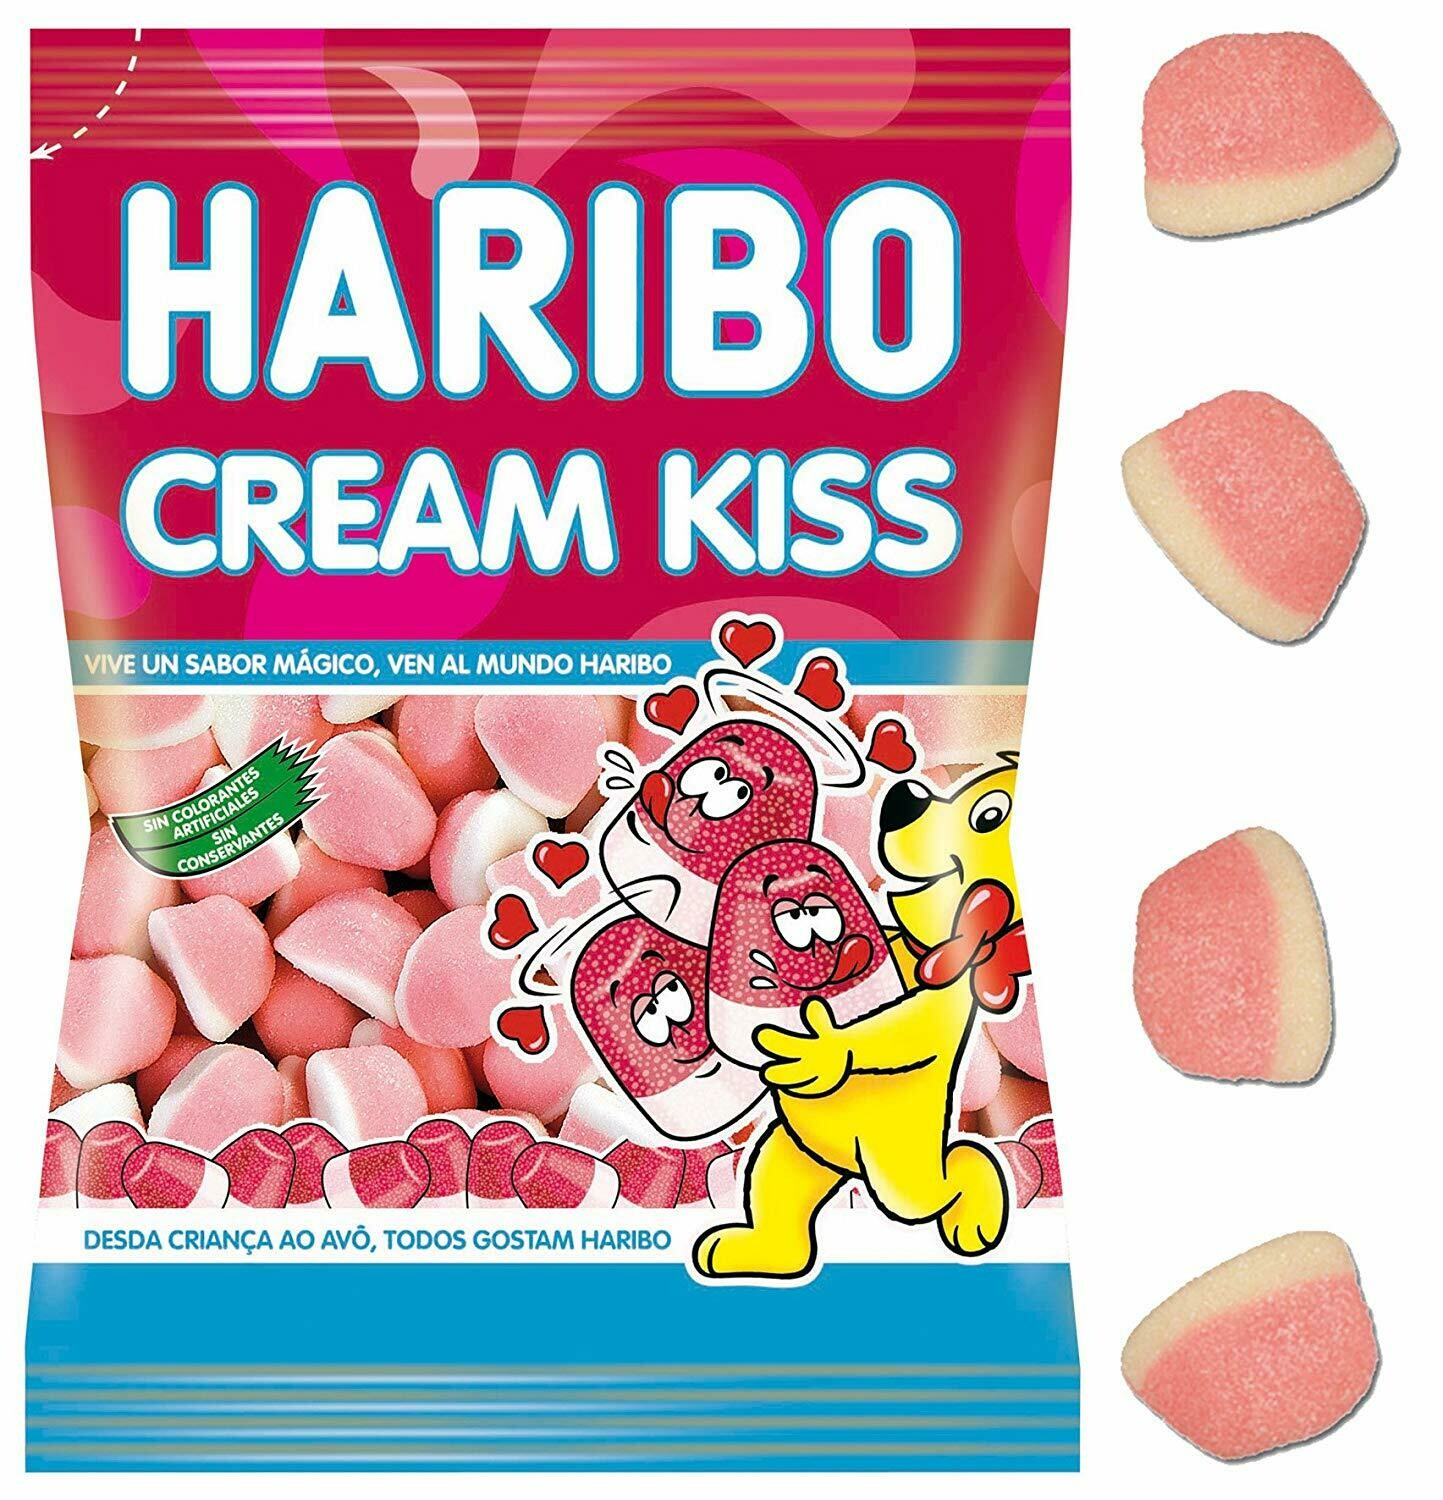 HARIBO CREAM KISS